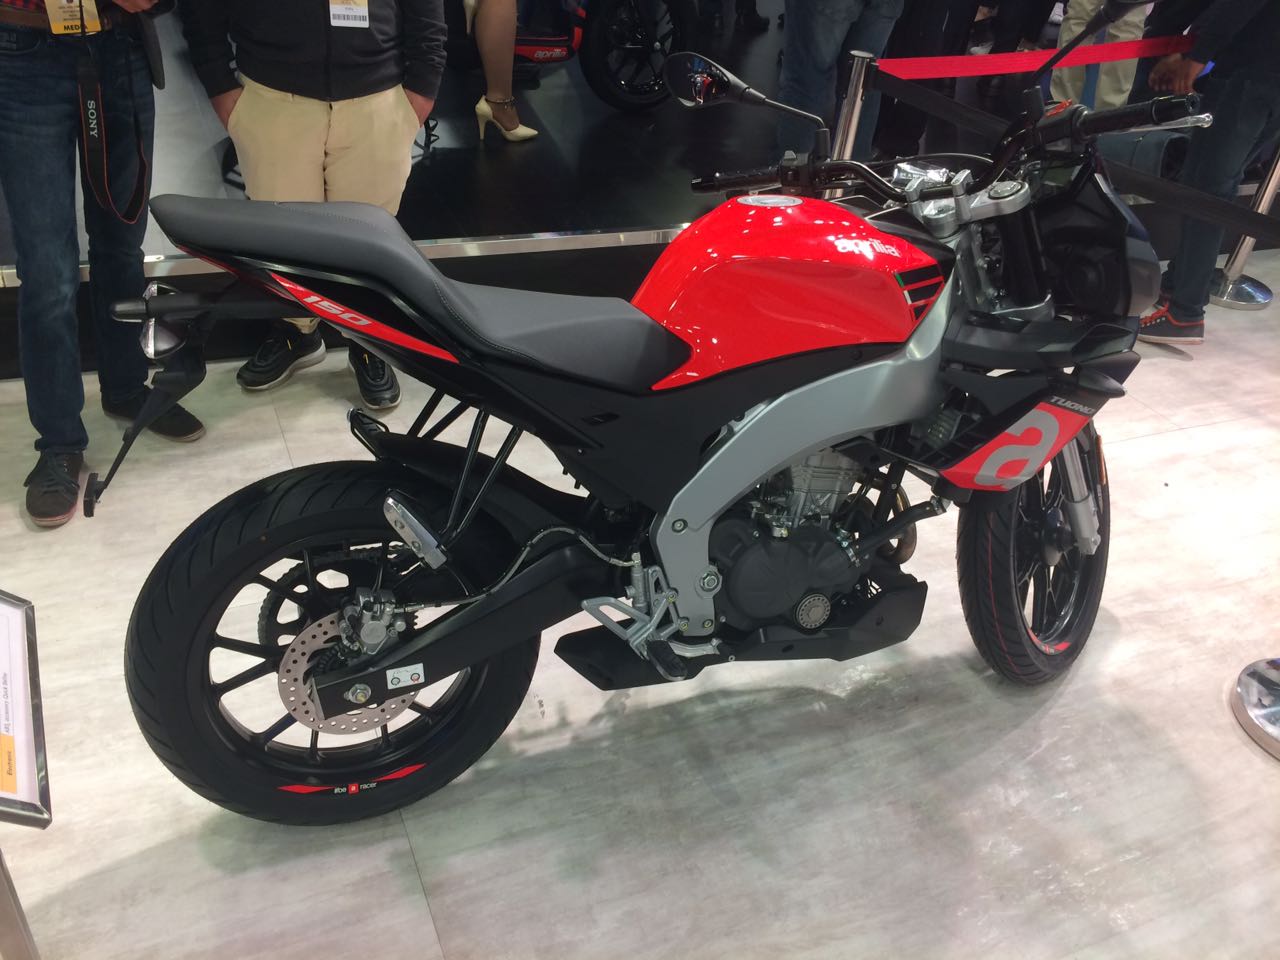 aprilia tuono 150 cc motorcycle images from auto expo 2018